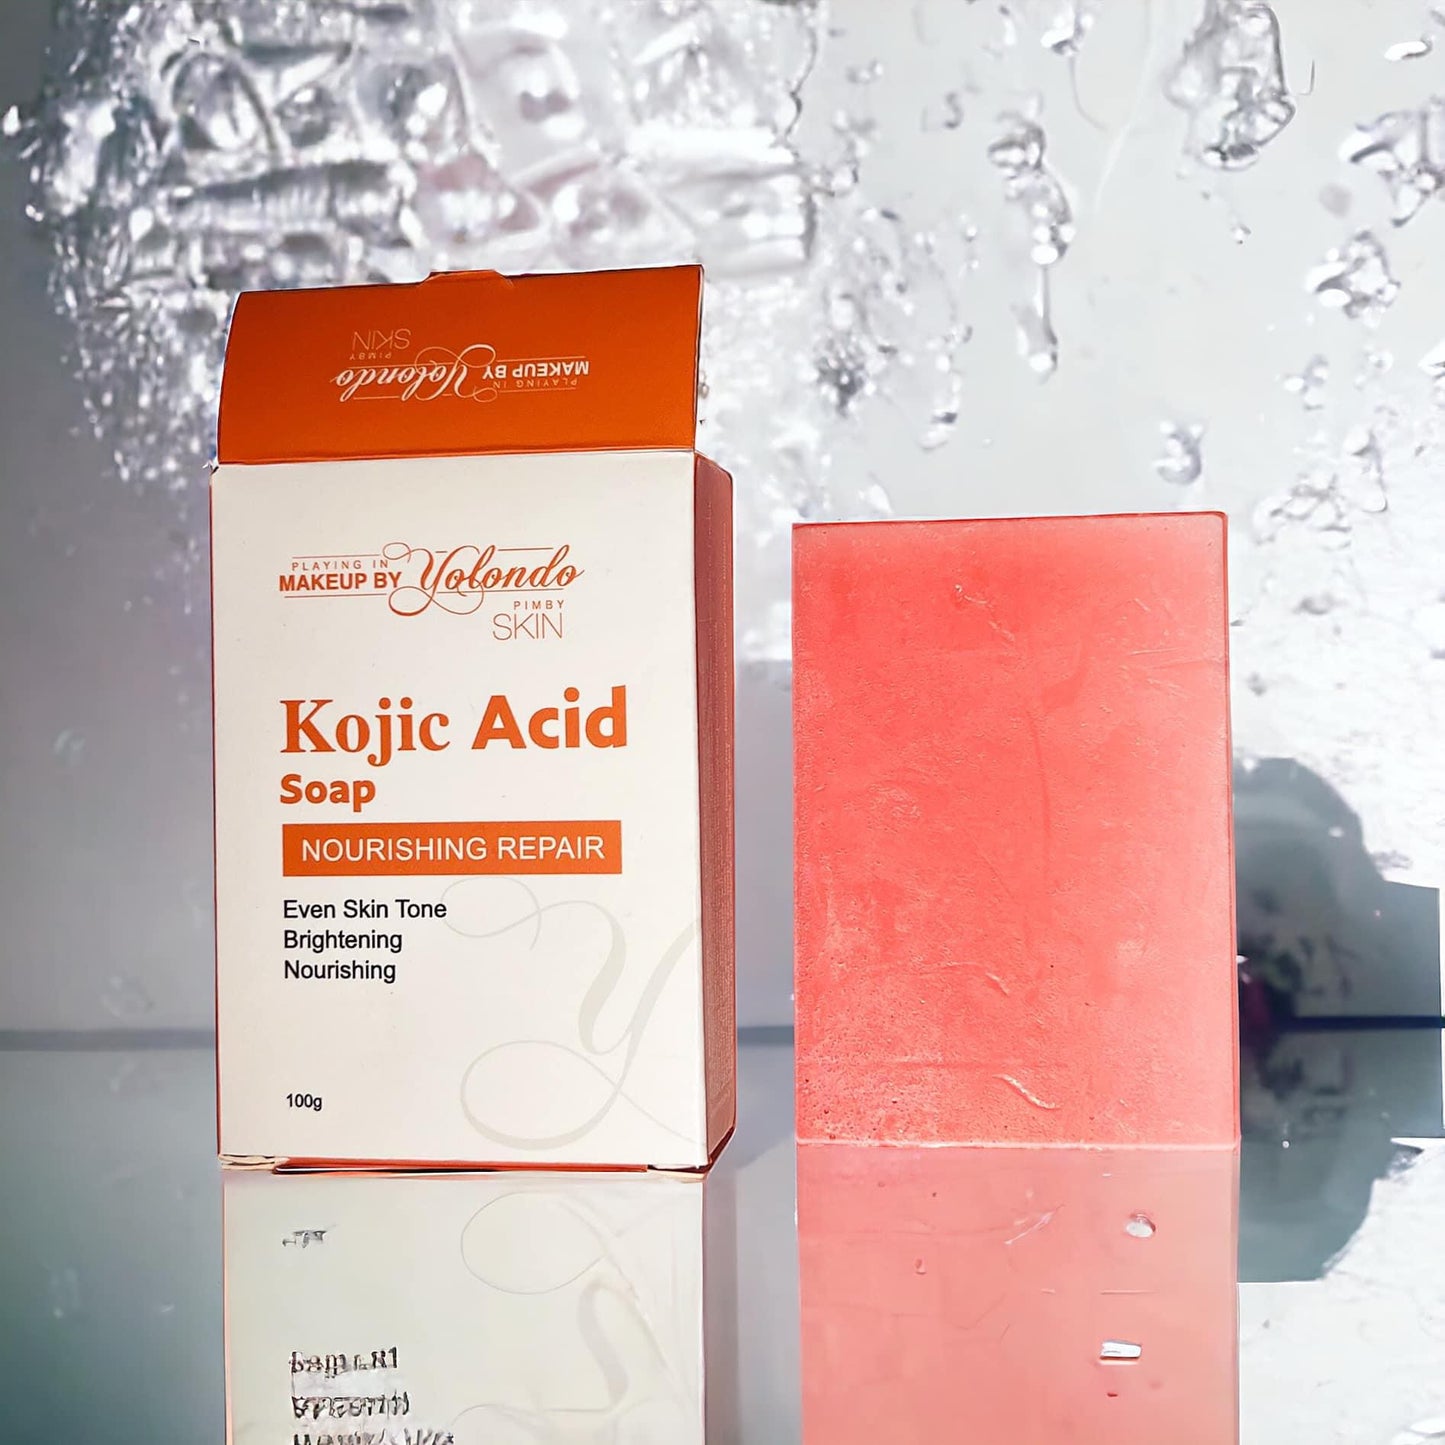 Kojic Acid Bar Soap